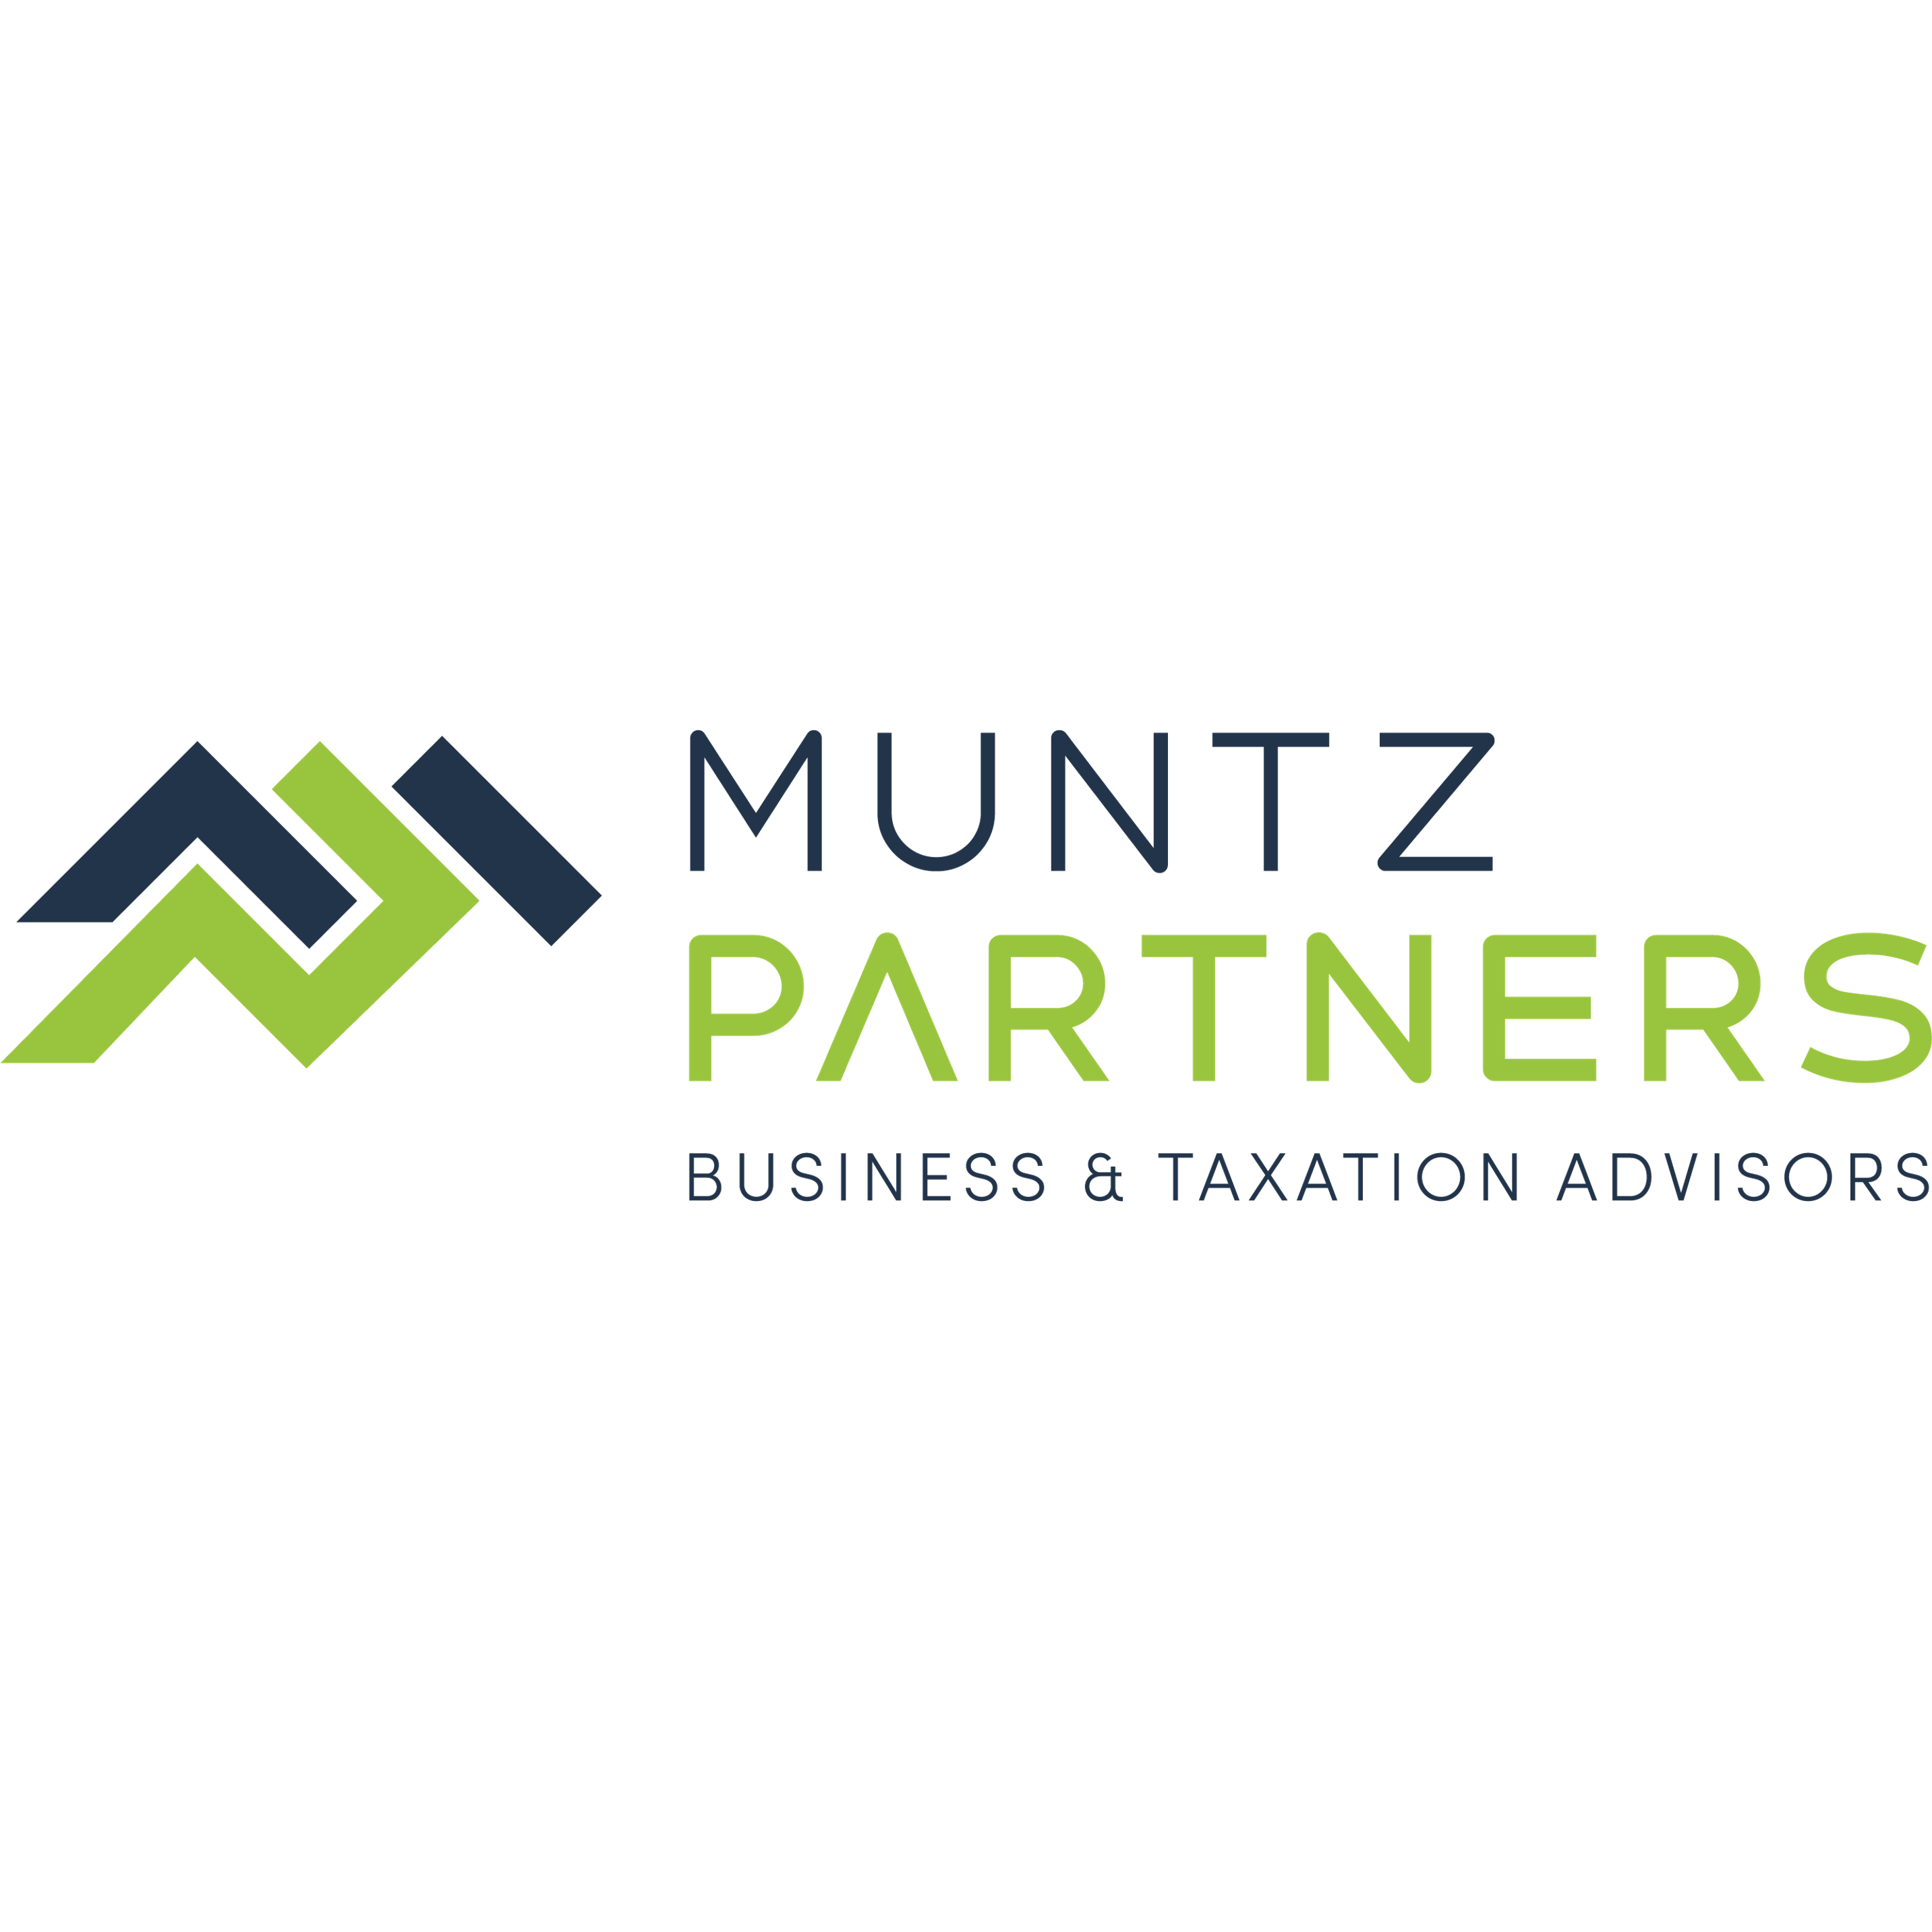 Muntz Partners Business & Taxation Advisors - York, WA 6302 - (08) 9641 2152 | ShowMeLocal.com